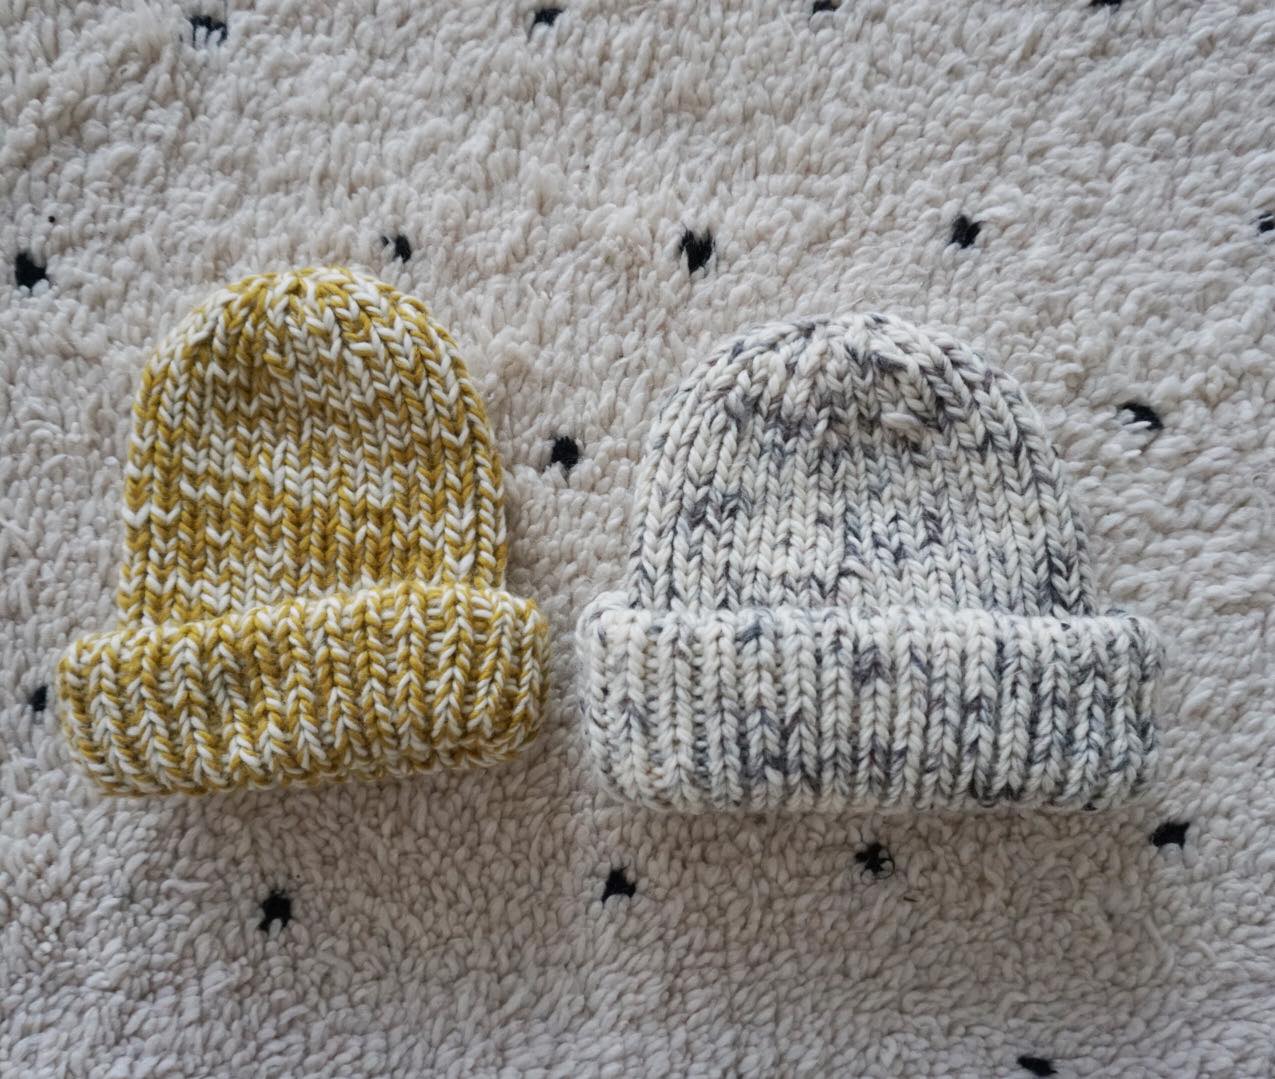  - Sky beanie | Knitted beanie pattern| Knitting pattern - by HipKnitShop - 08/01/2021